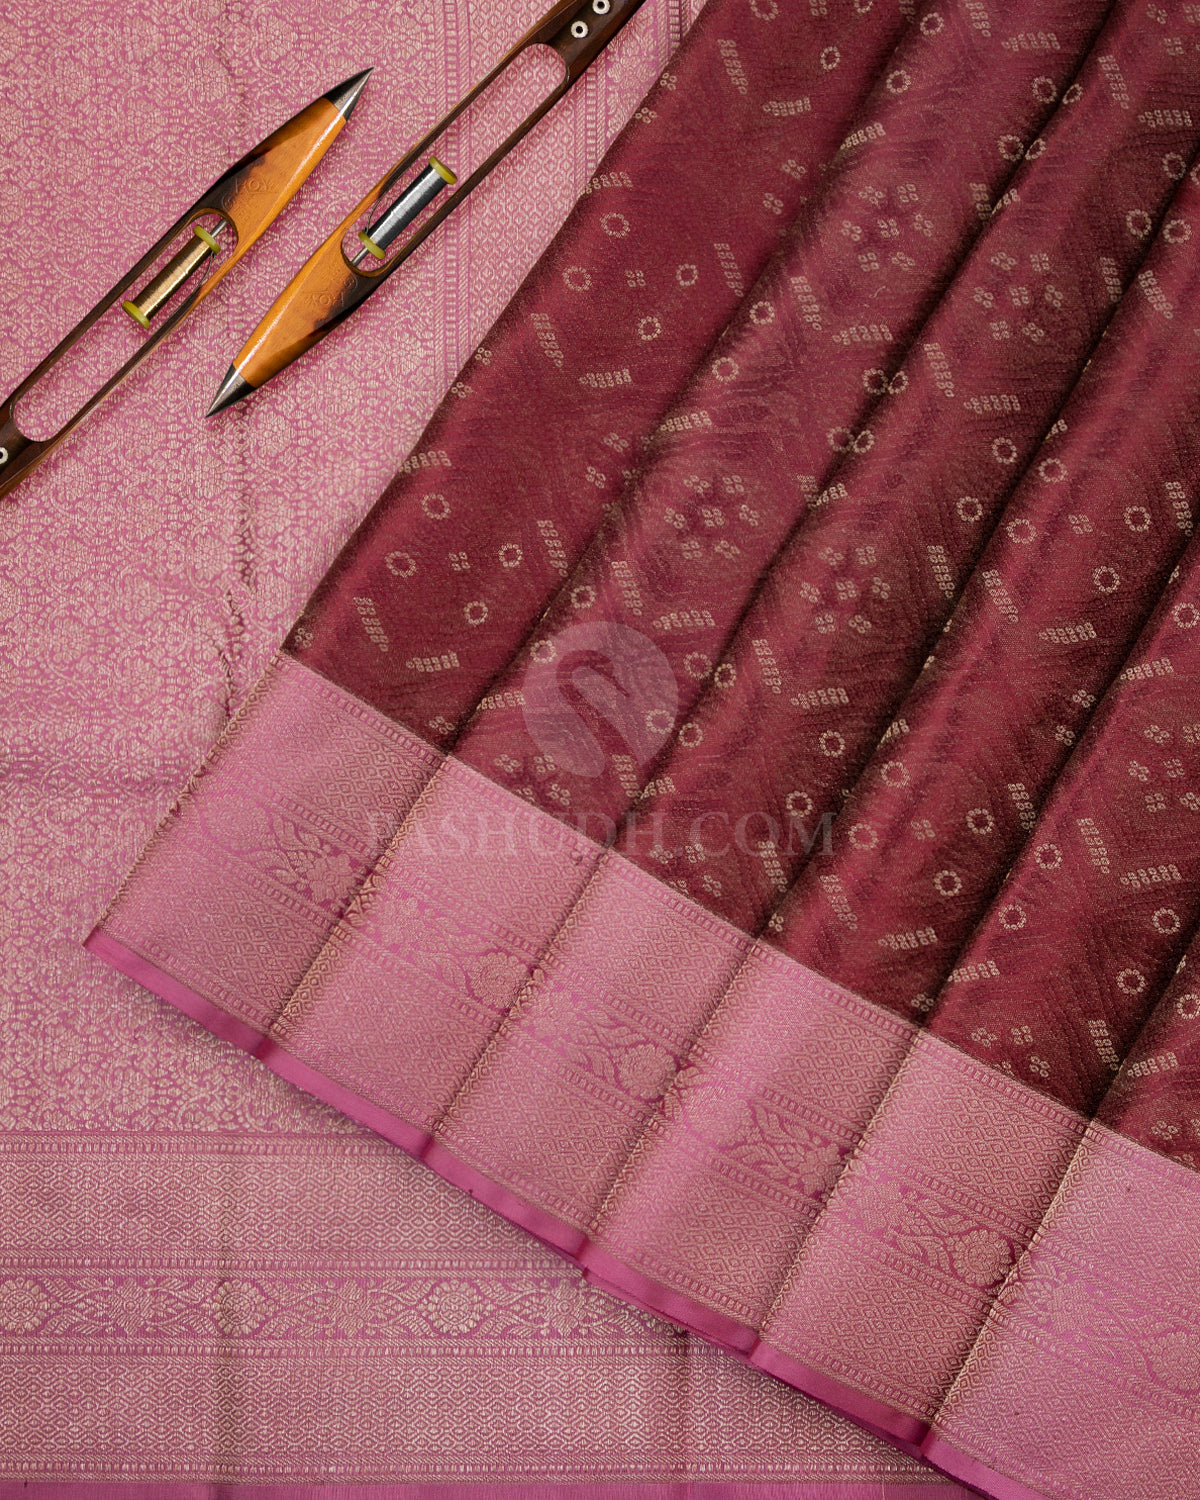 Brown and Pink Kanjivaram Silk Saree - DT197 - View 2